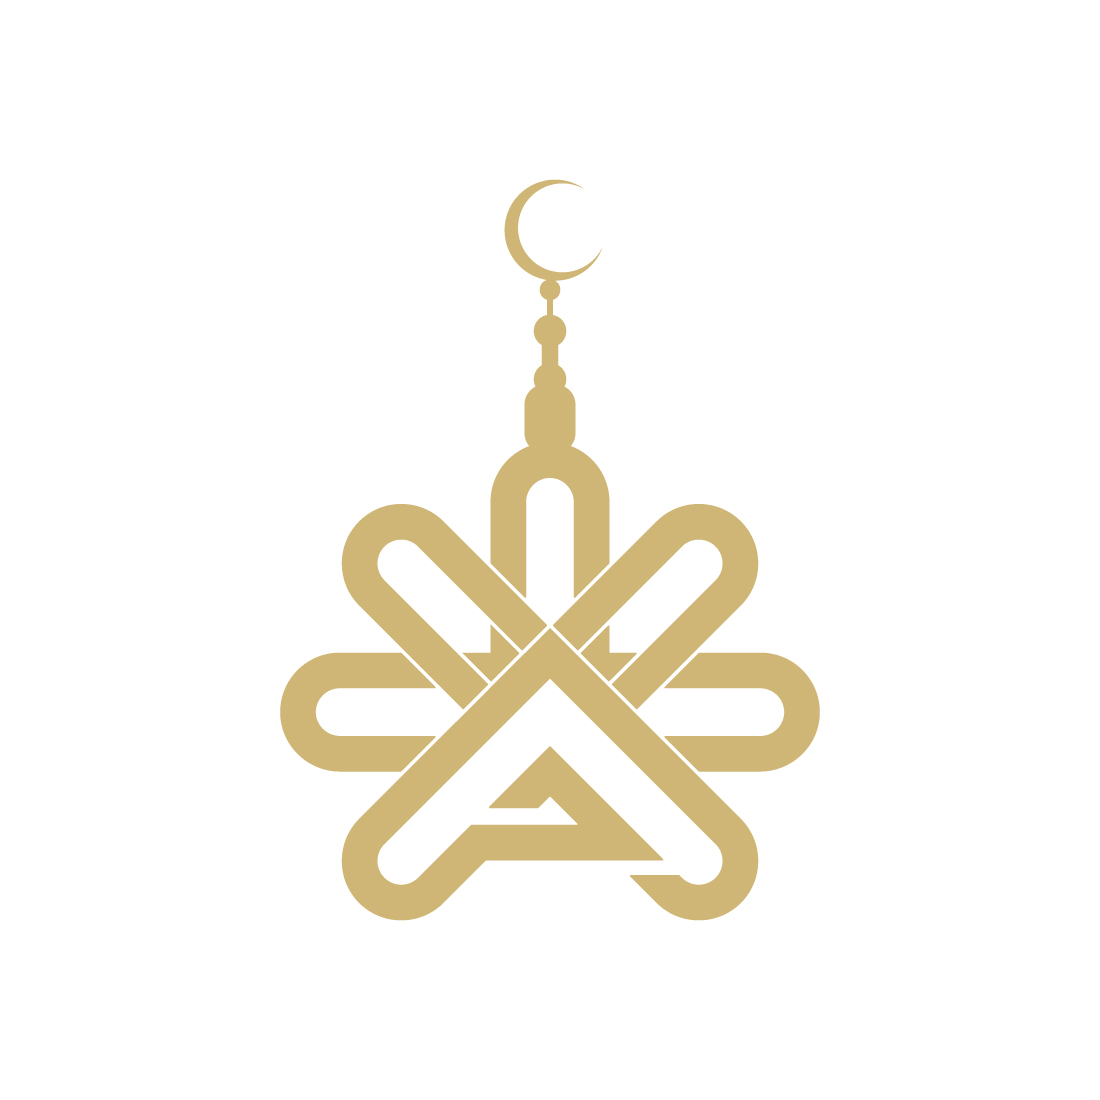 Eid Mubarak logo design vector images Mosque logo design template images A letter logo design vector icon A Islamic logo design preview image.